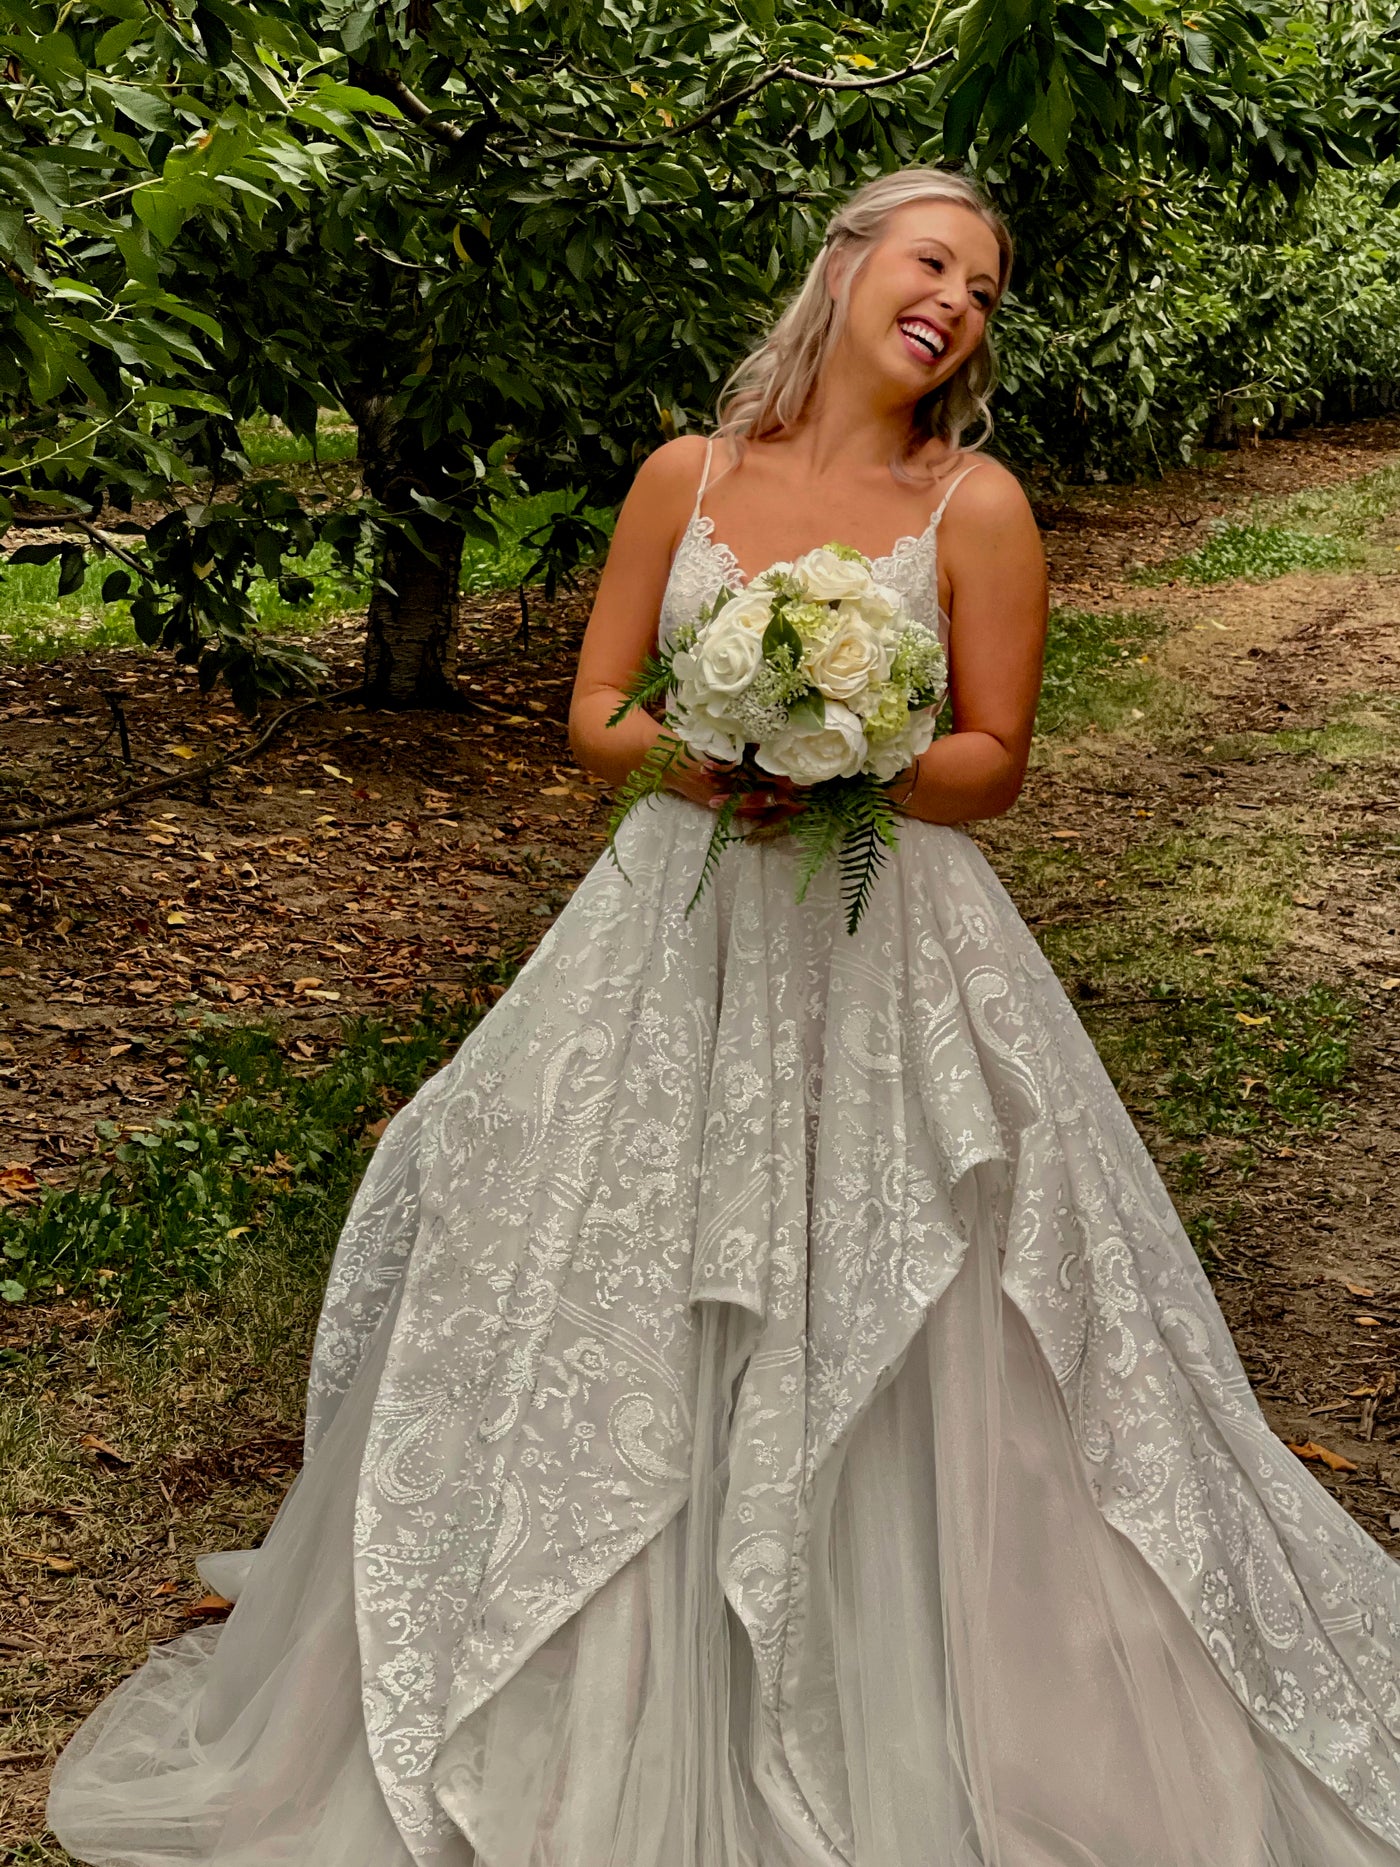 Bridal Bouquet in Buttercream